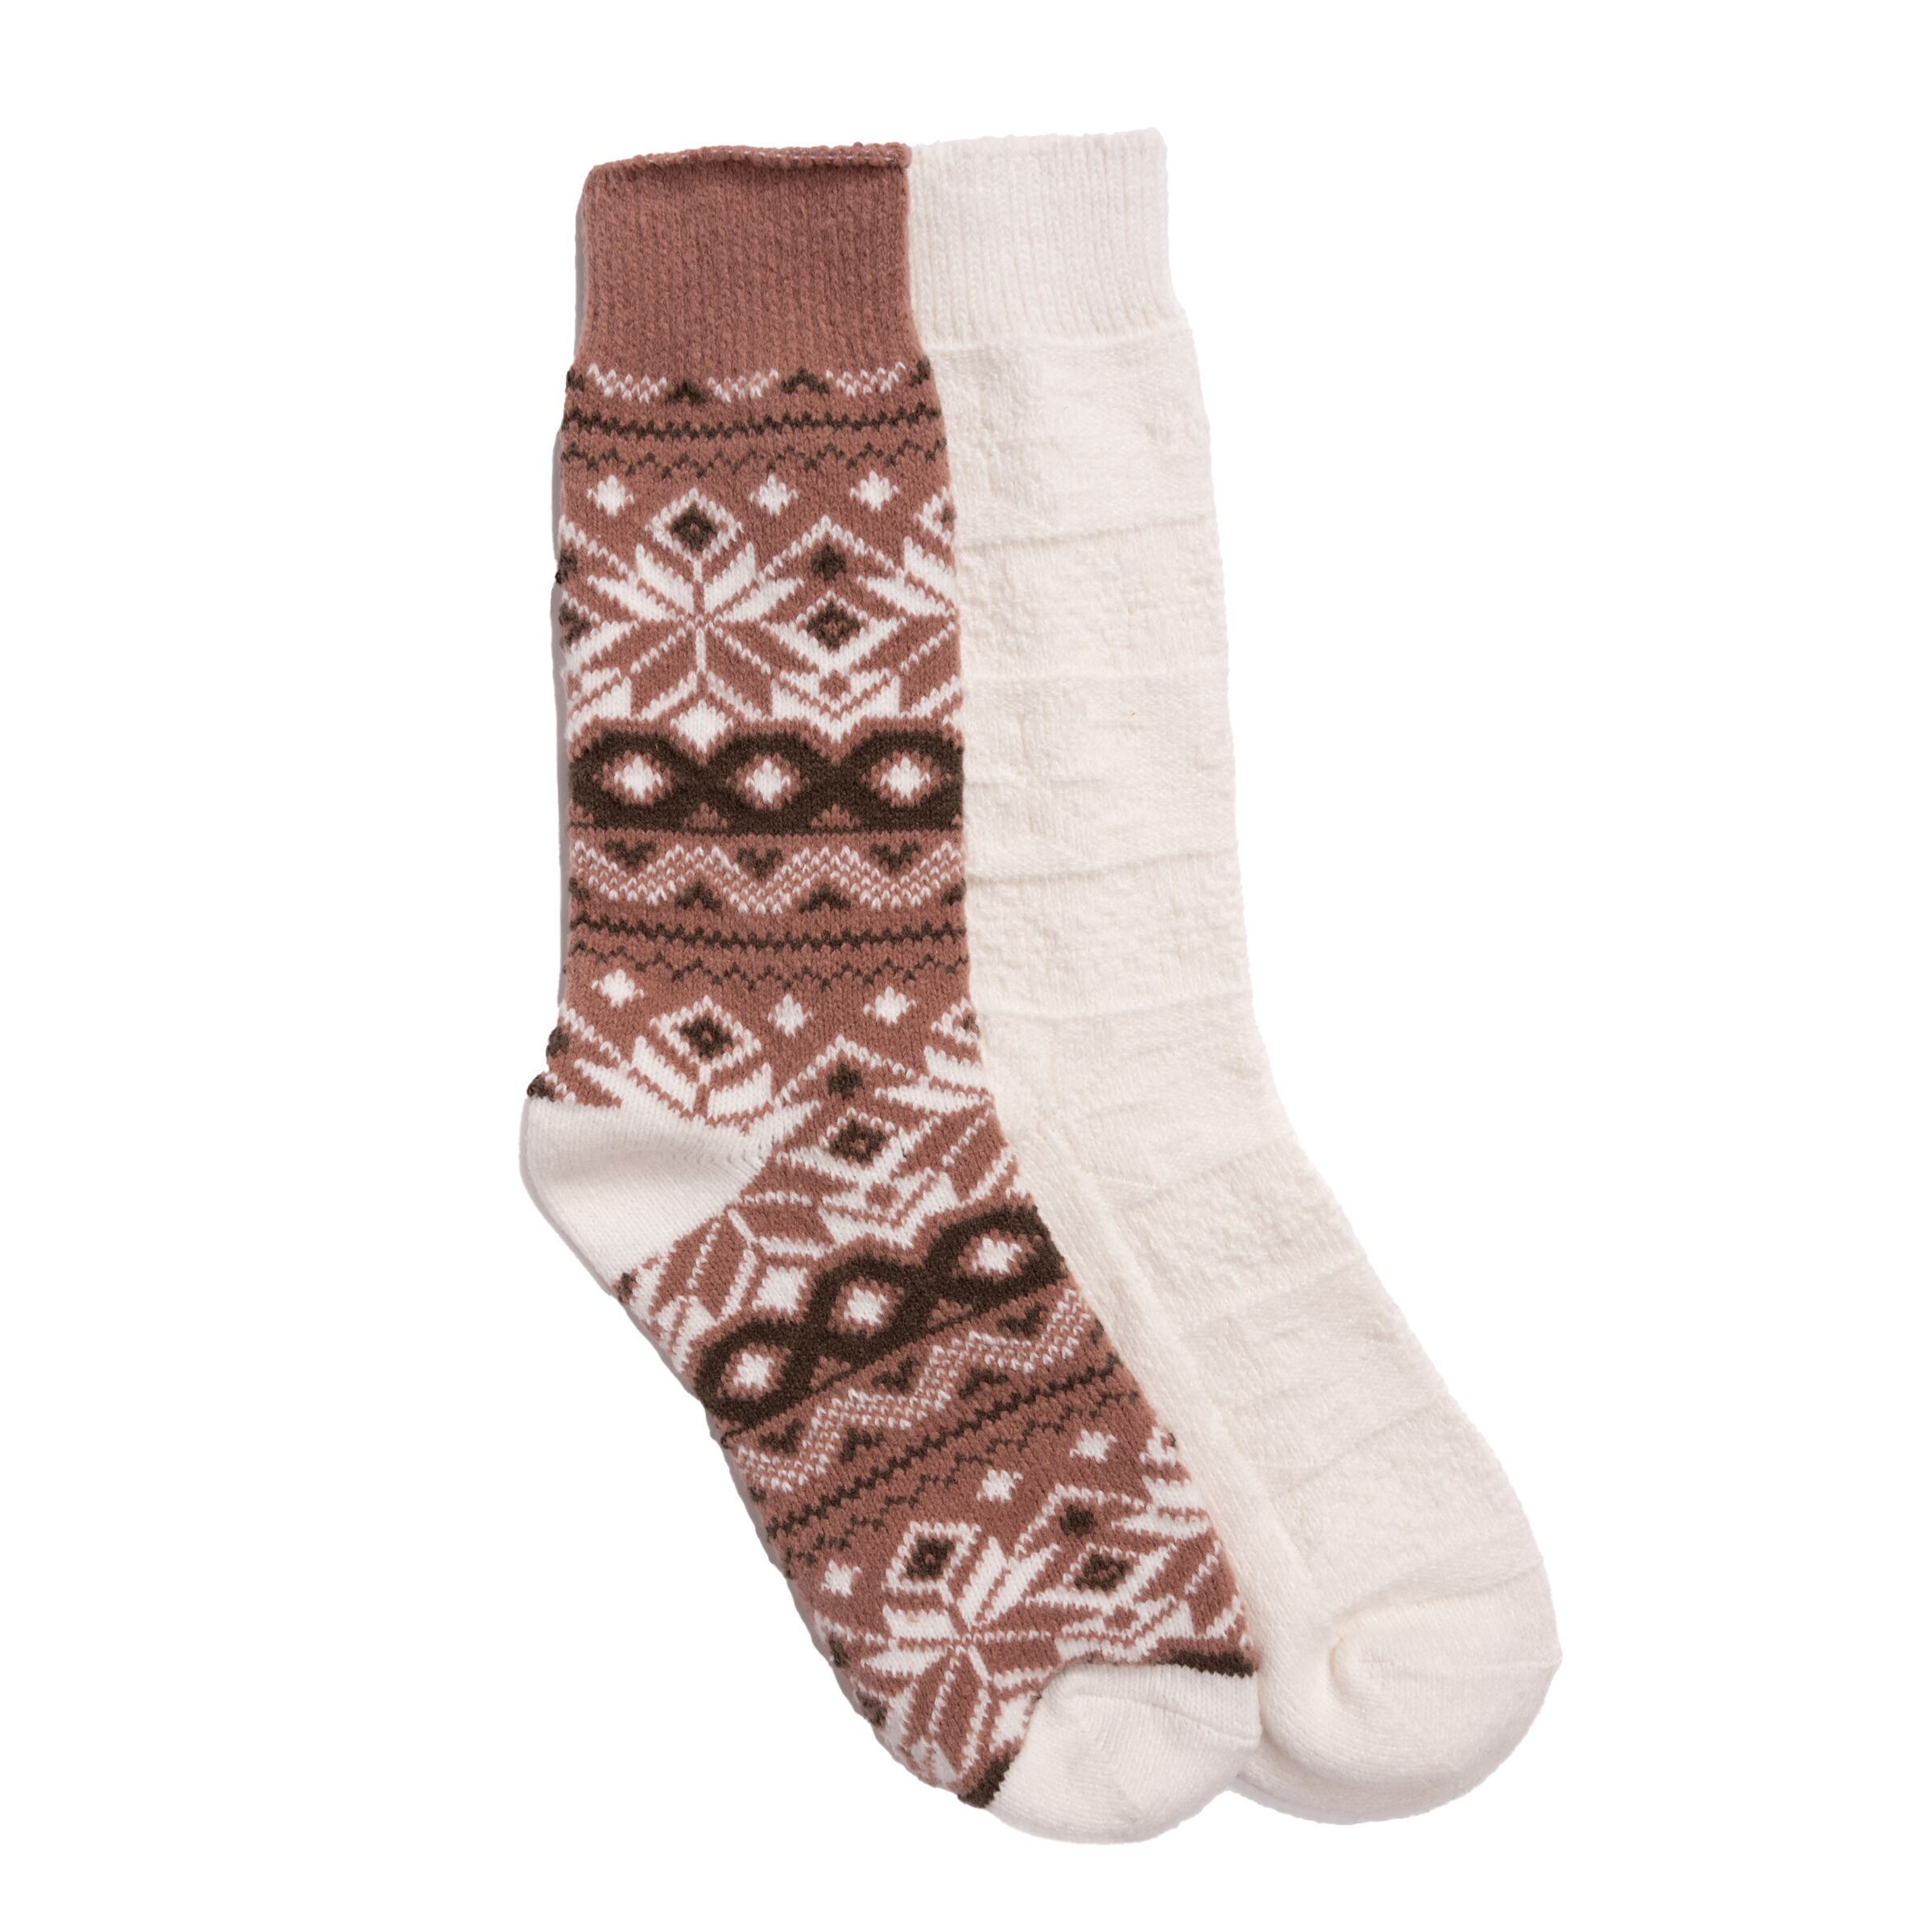 Fluffy Boot Socks 2-Pair Pack - Assorted